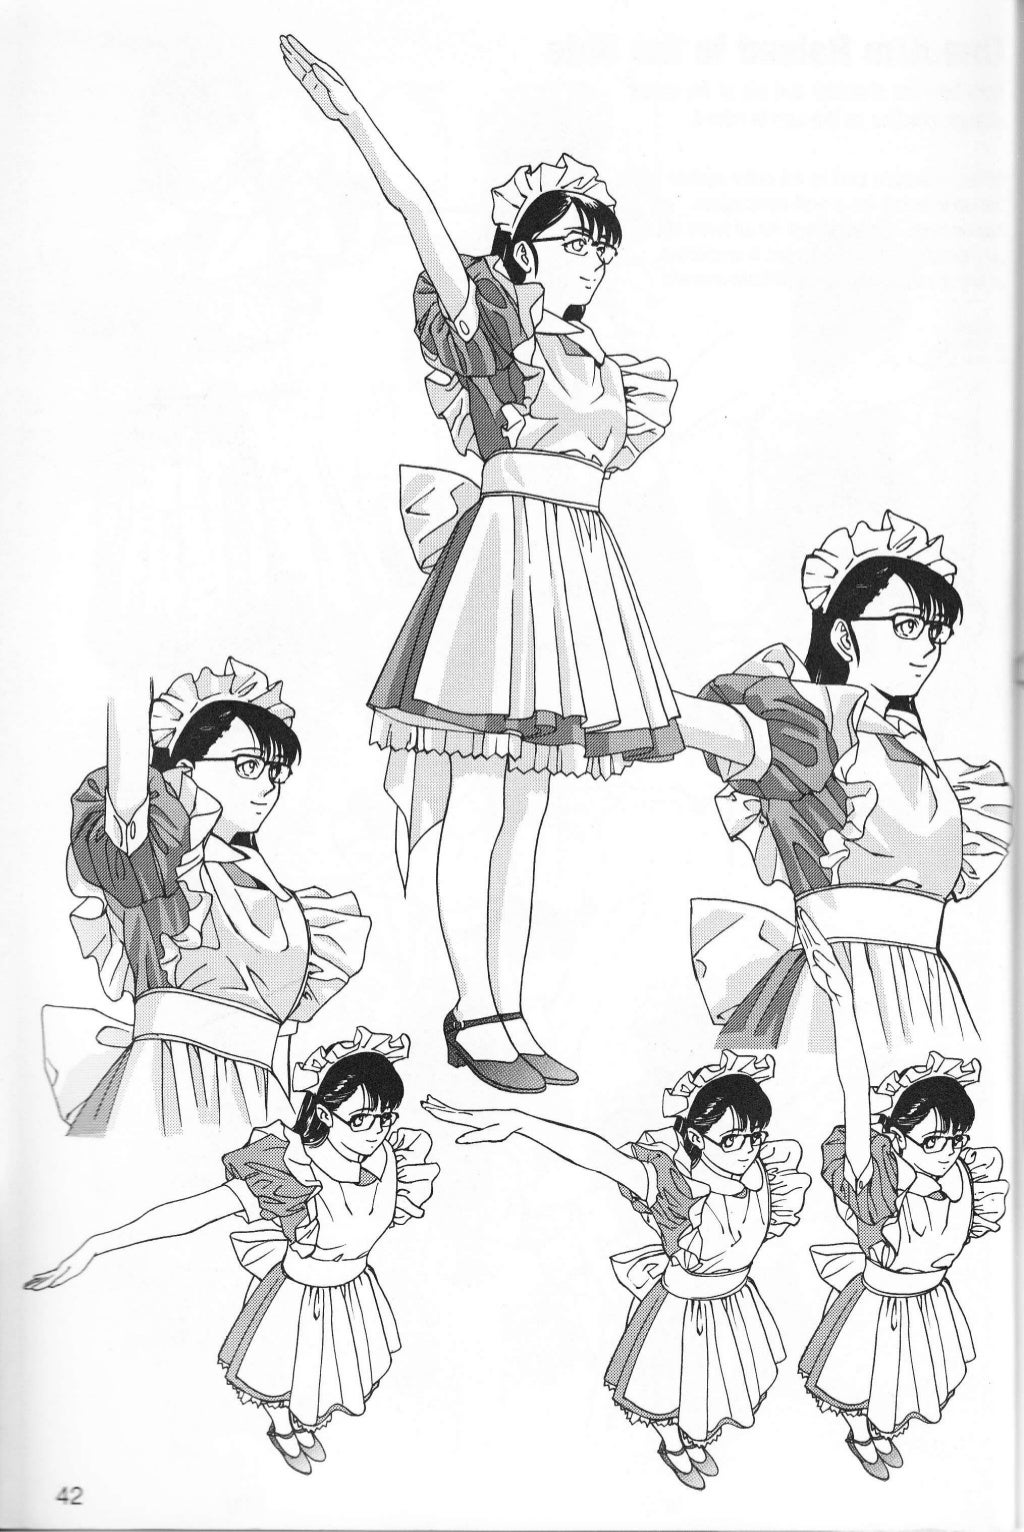 How to-draw-manga-vol-11-maids-miko